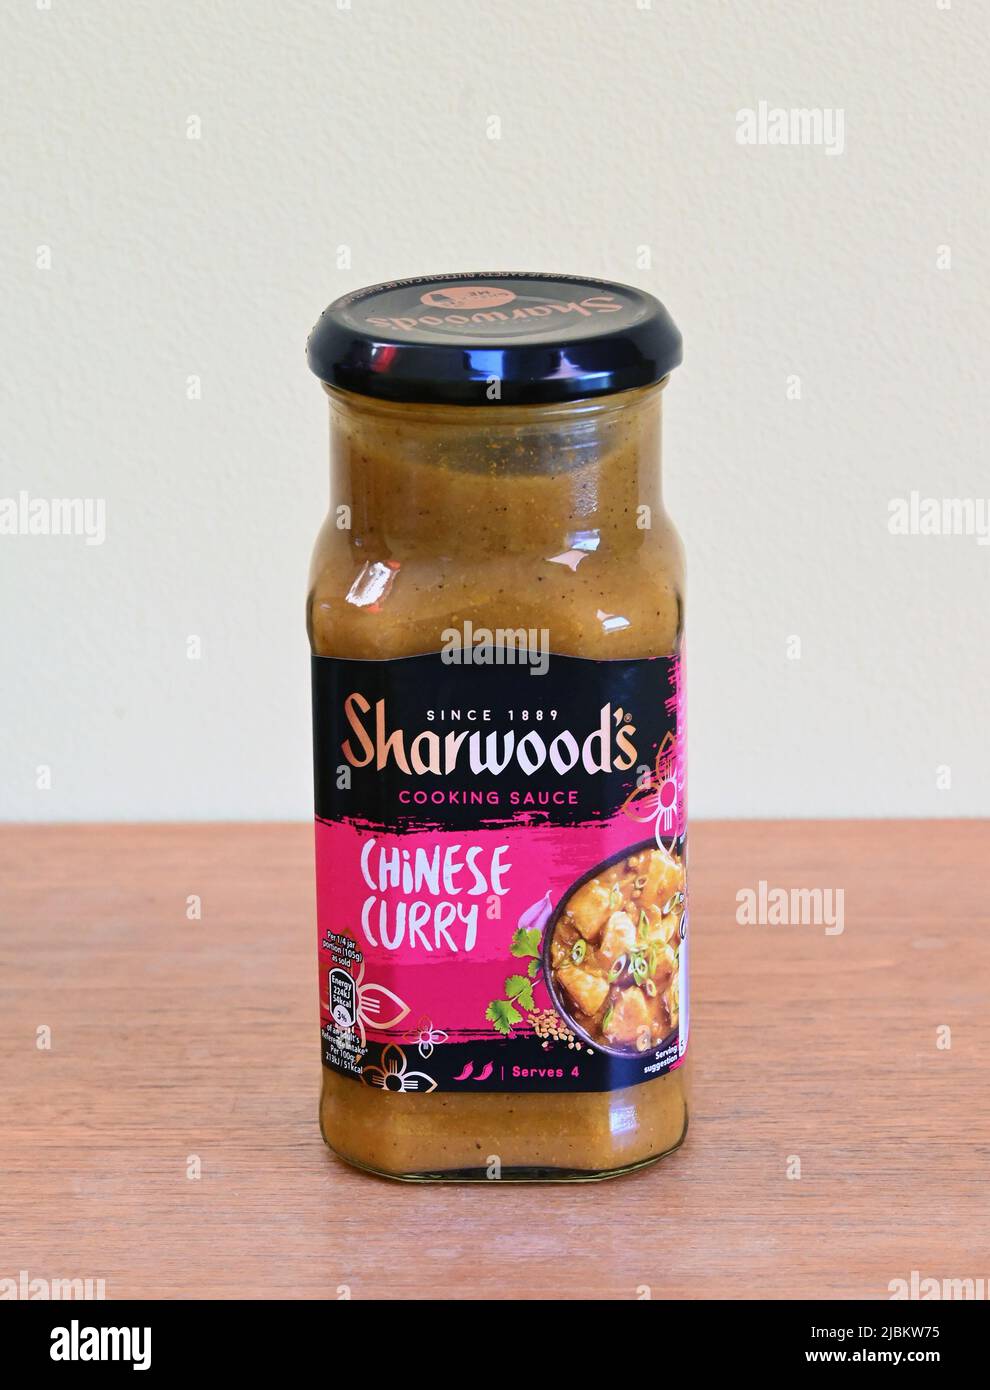 Tarro de salsa de cocina de Sharwood. Curry chino. Foto de stock